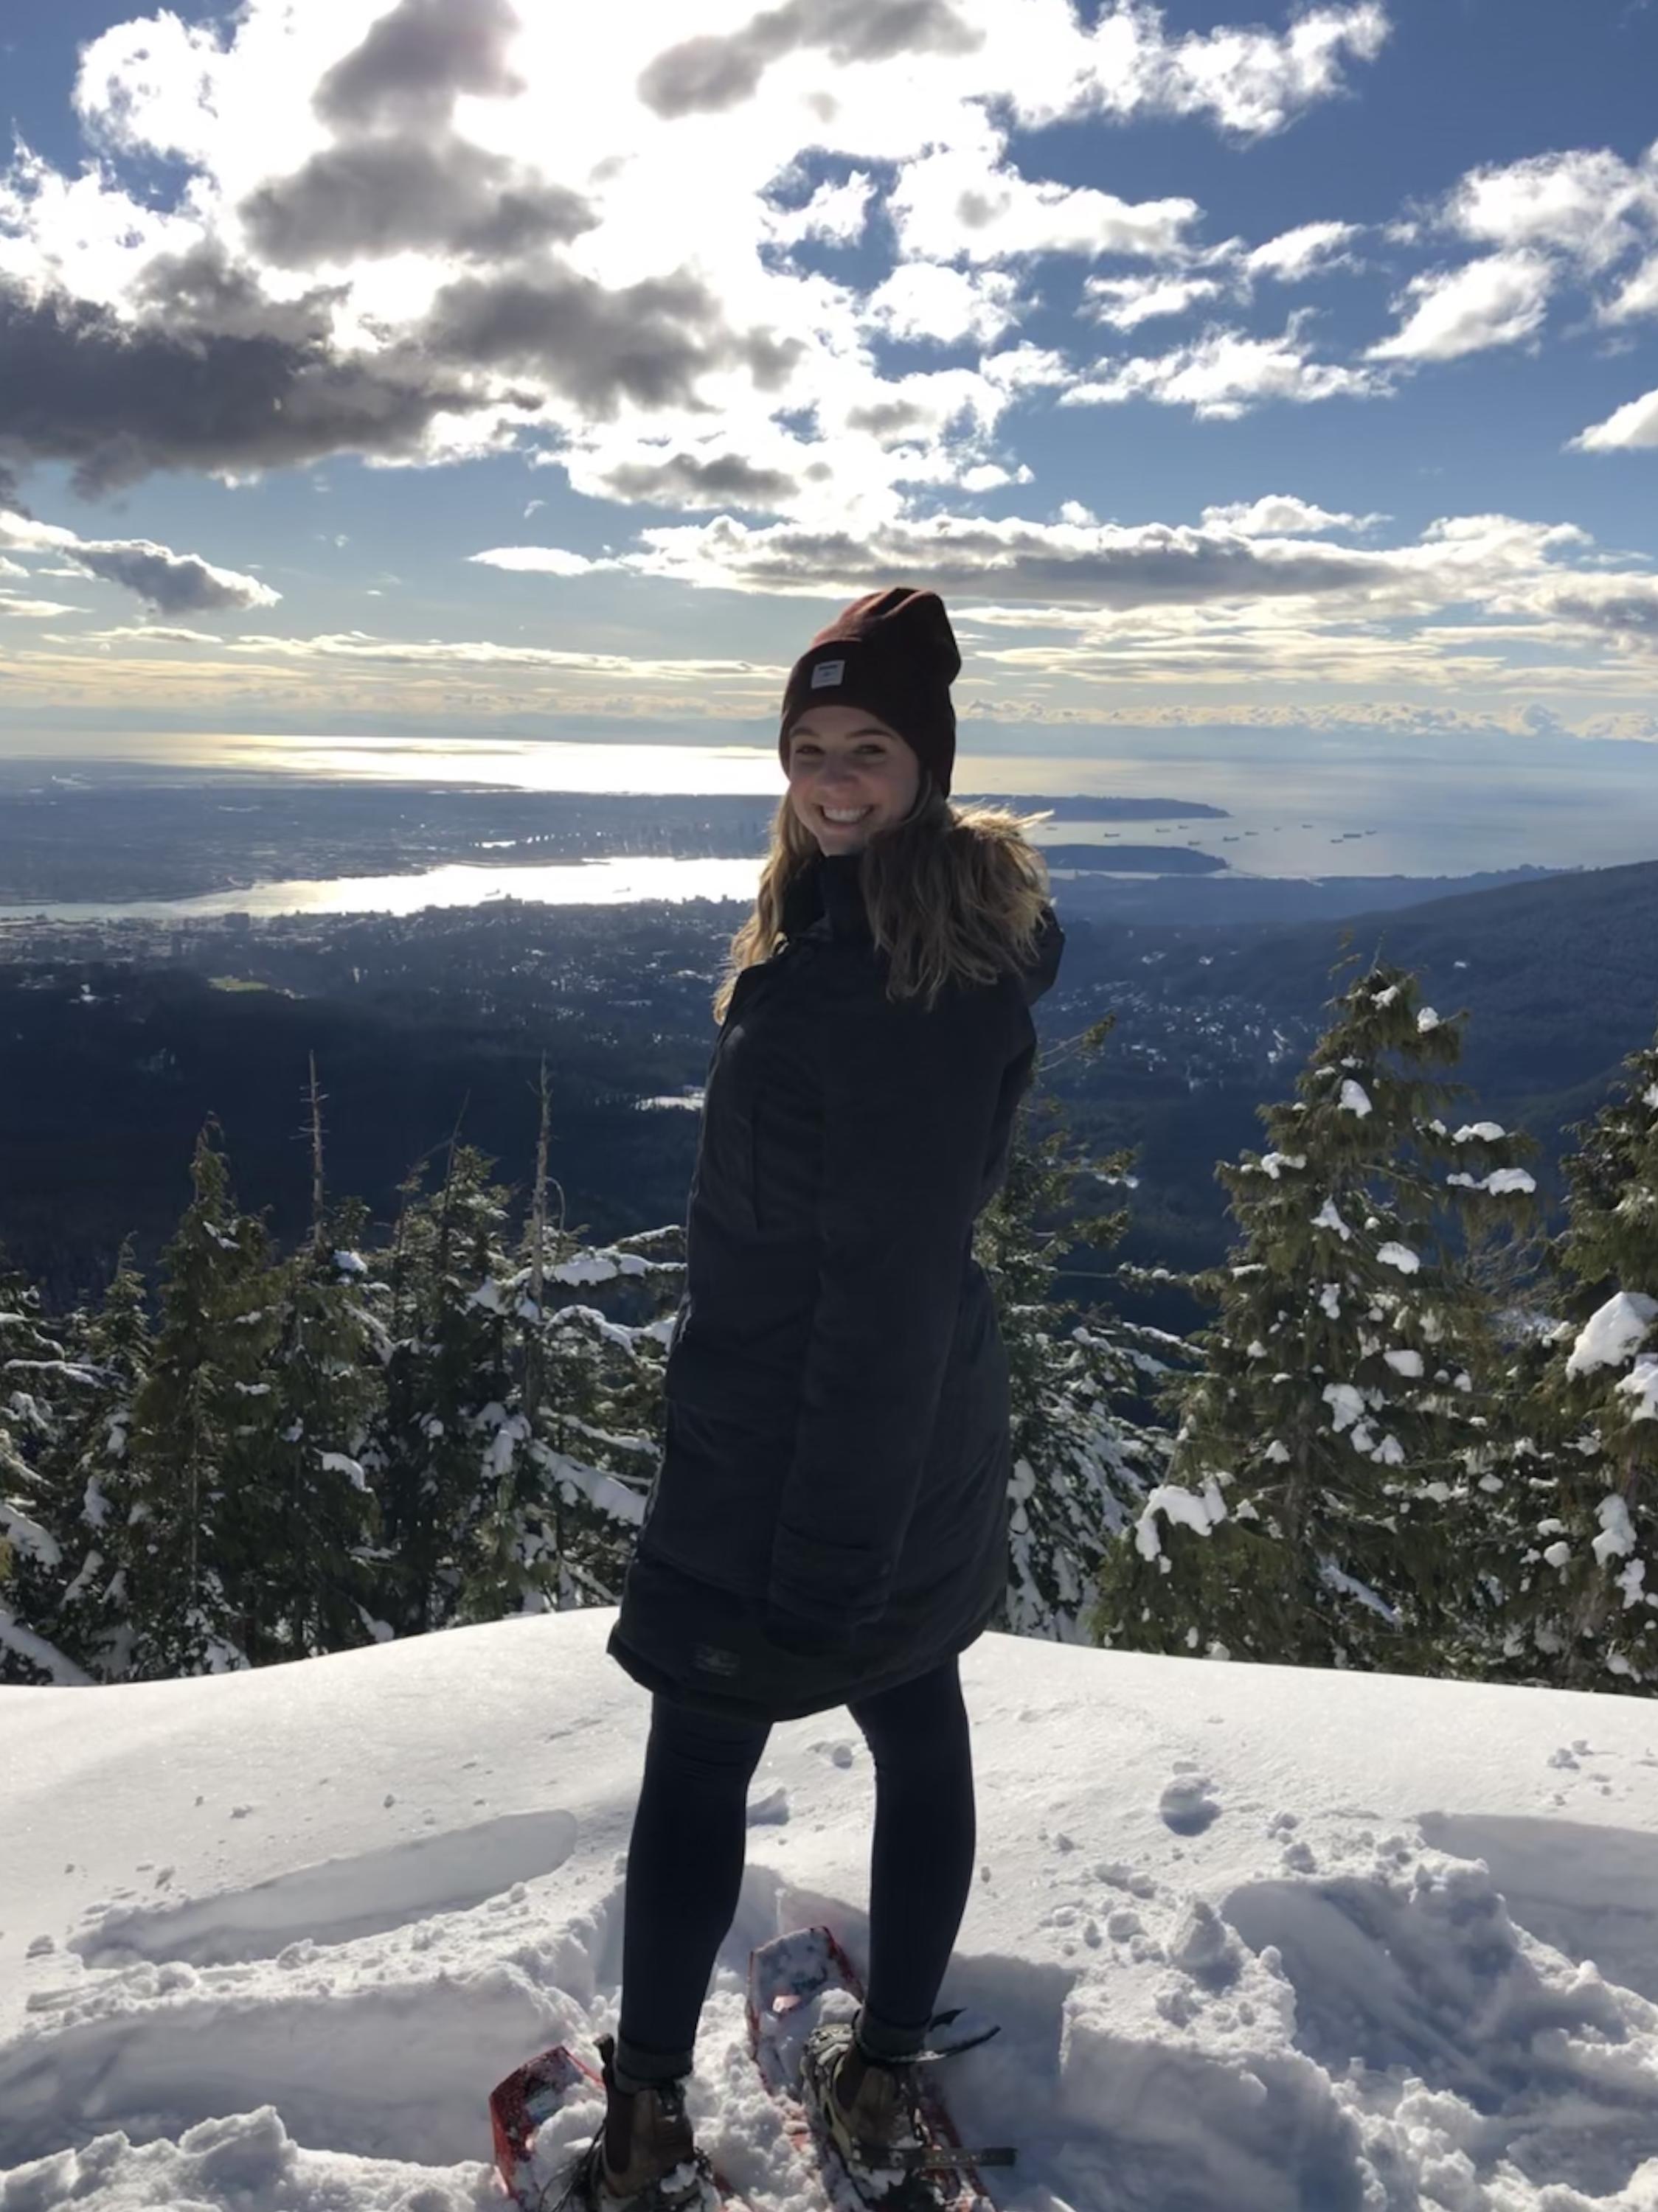 Nikki snowshoeing in the mountains